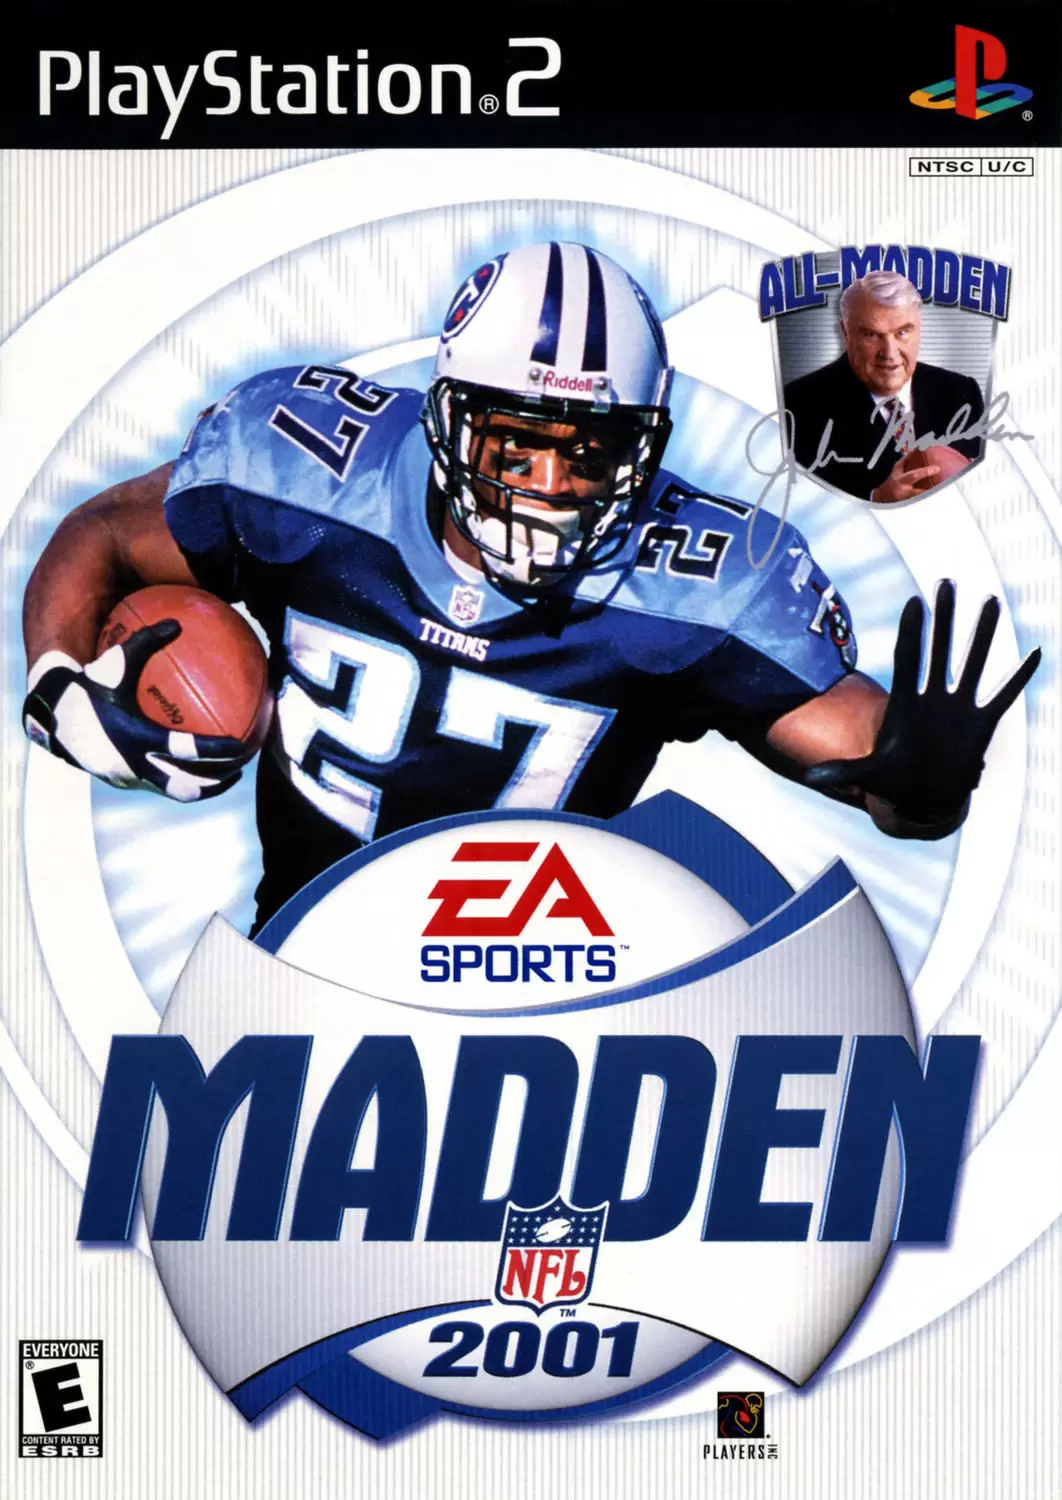 PS2 Games - Madden NFL 2001